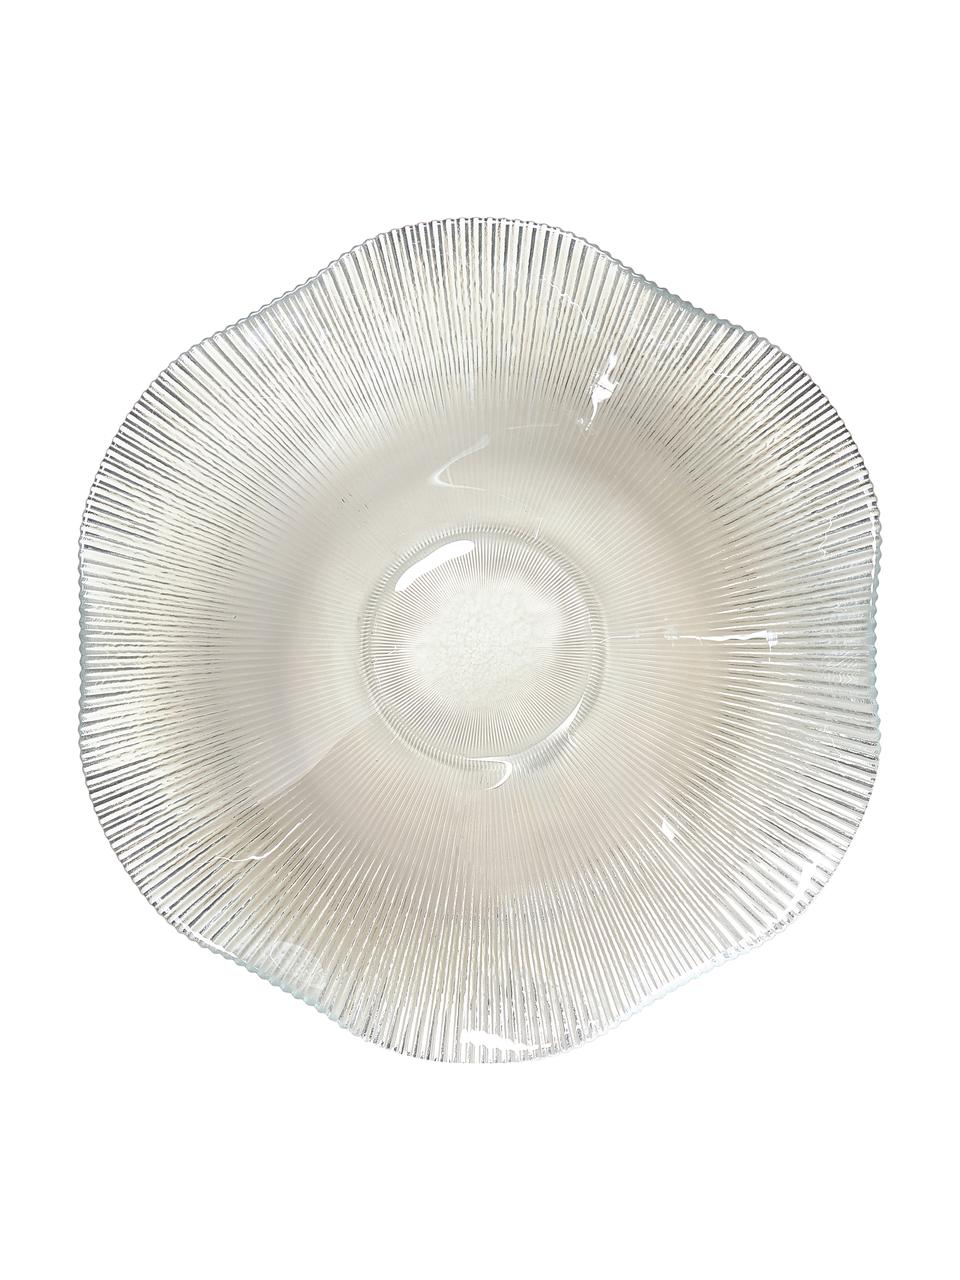 Glazen saladeschaal Luce met groefreliëf in organisch vorm, Glas, Transparant, Ø 36 x H 8 cm